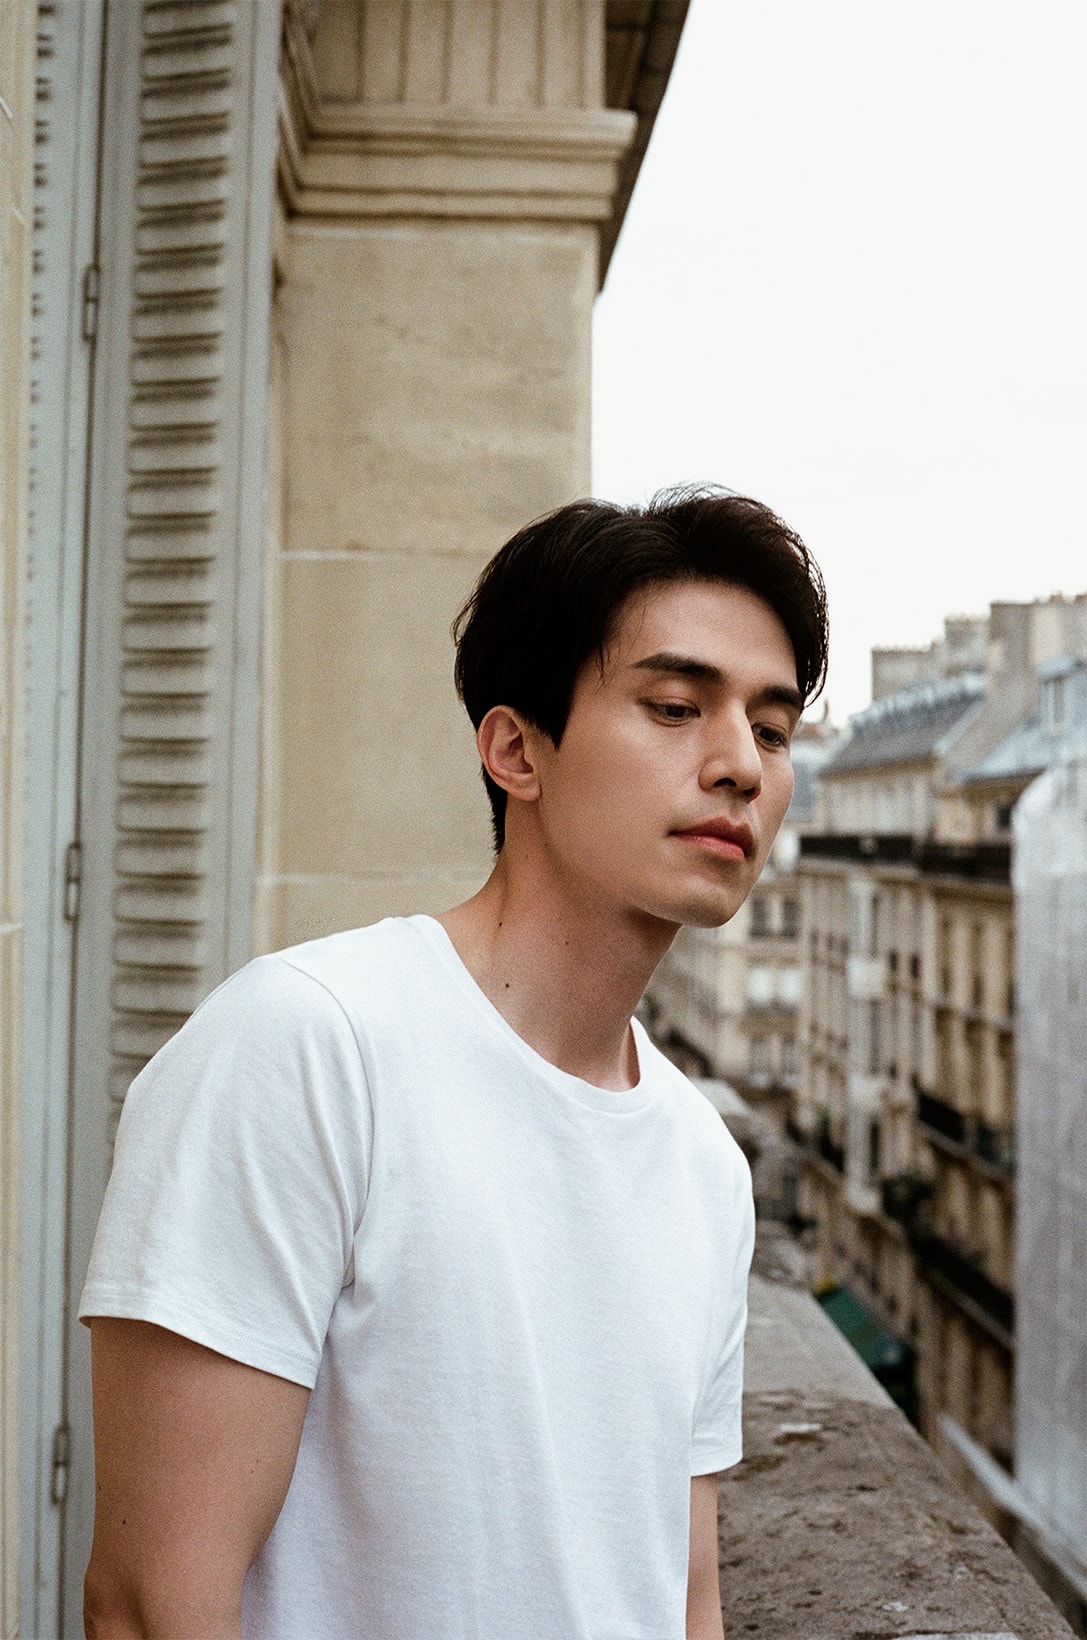 Chanel Debuts Revolutionary Makeup Line For Men: 'Boy De Chanel